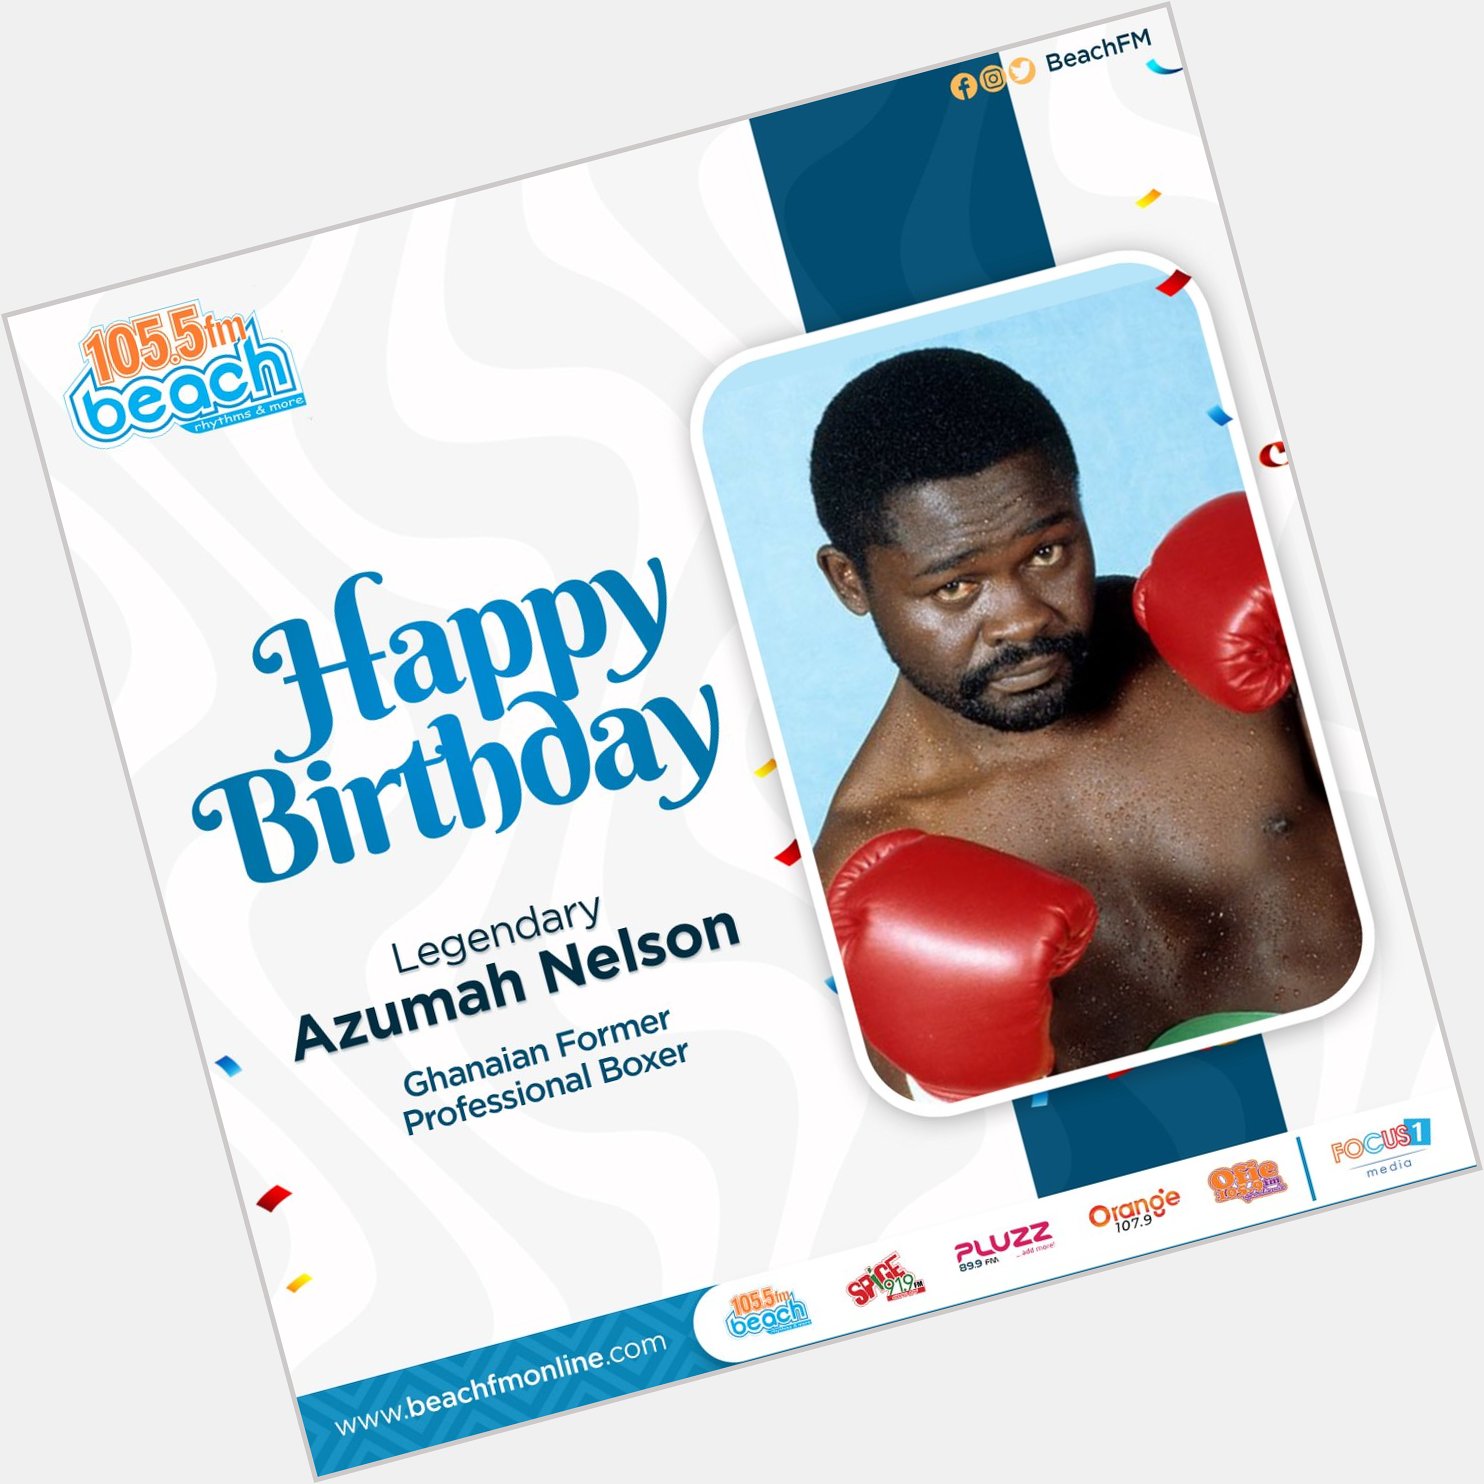 Happy birthday to the legendary Azumah Nelson! 